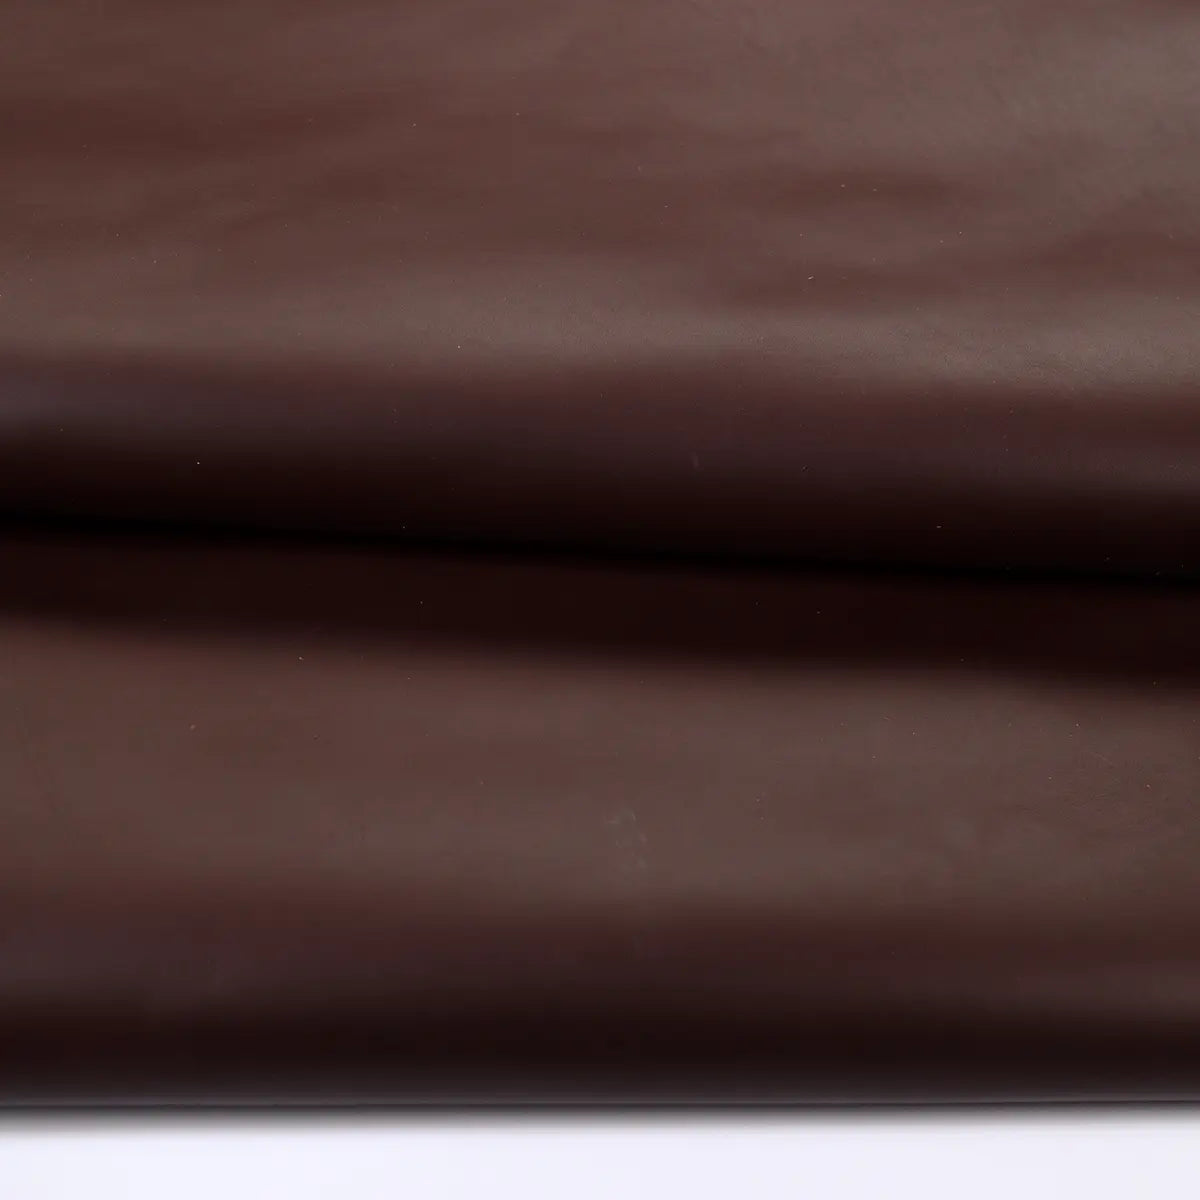 Watergate Briar Chrome Tanned 5-6oz Leather